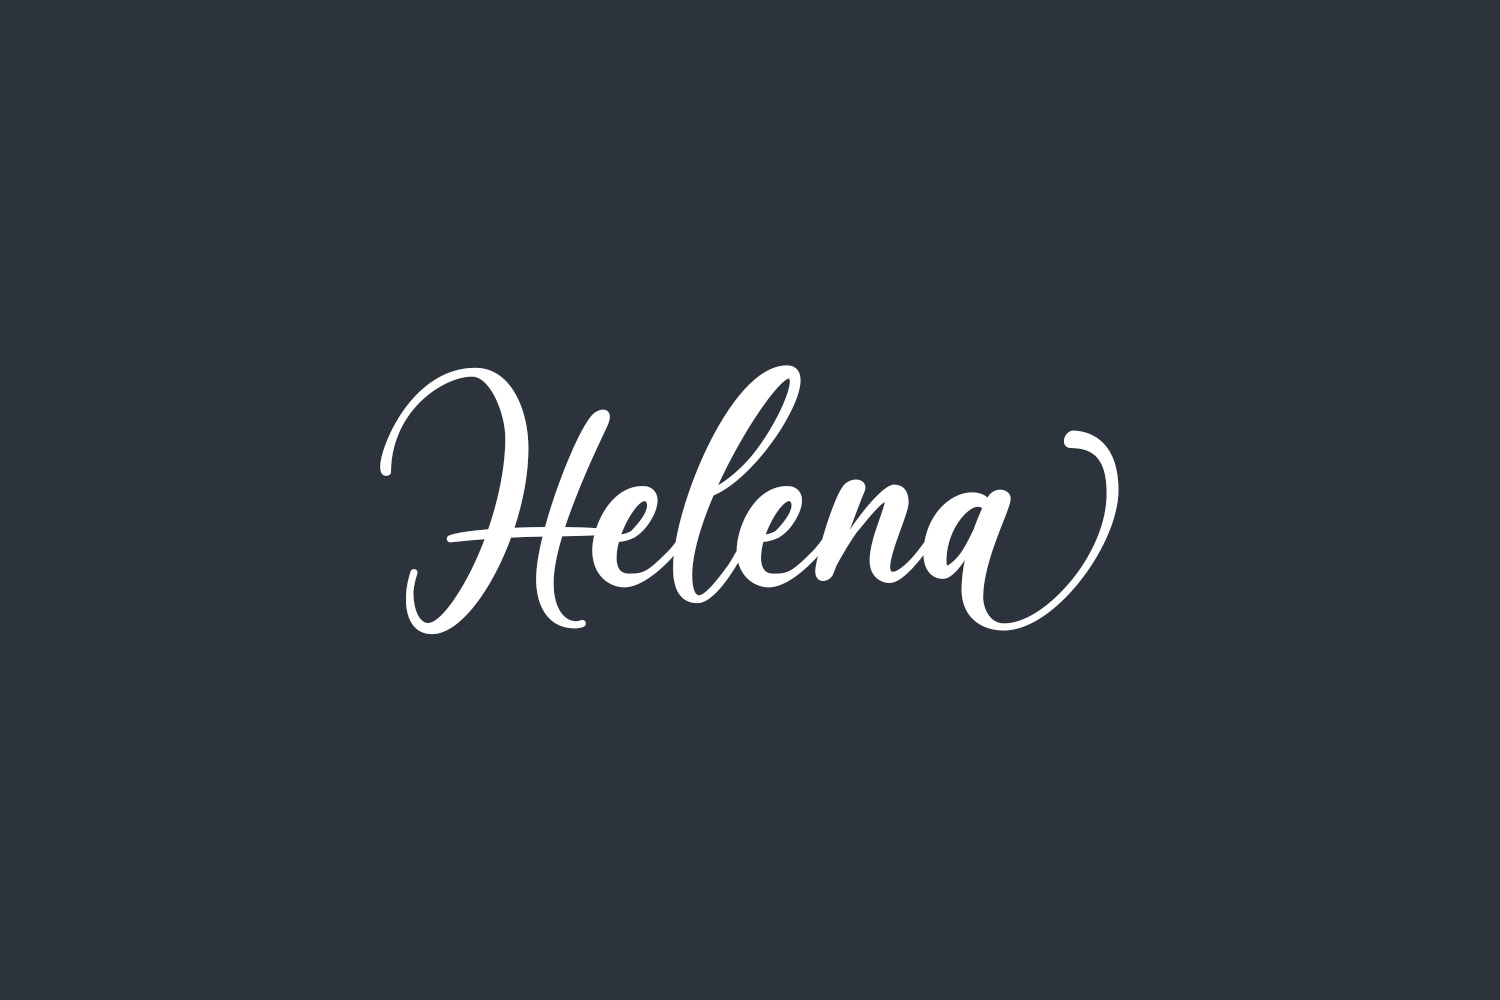 Helena Free Font